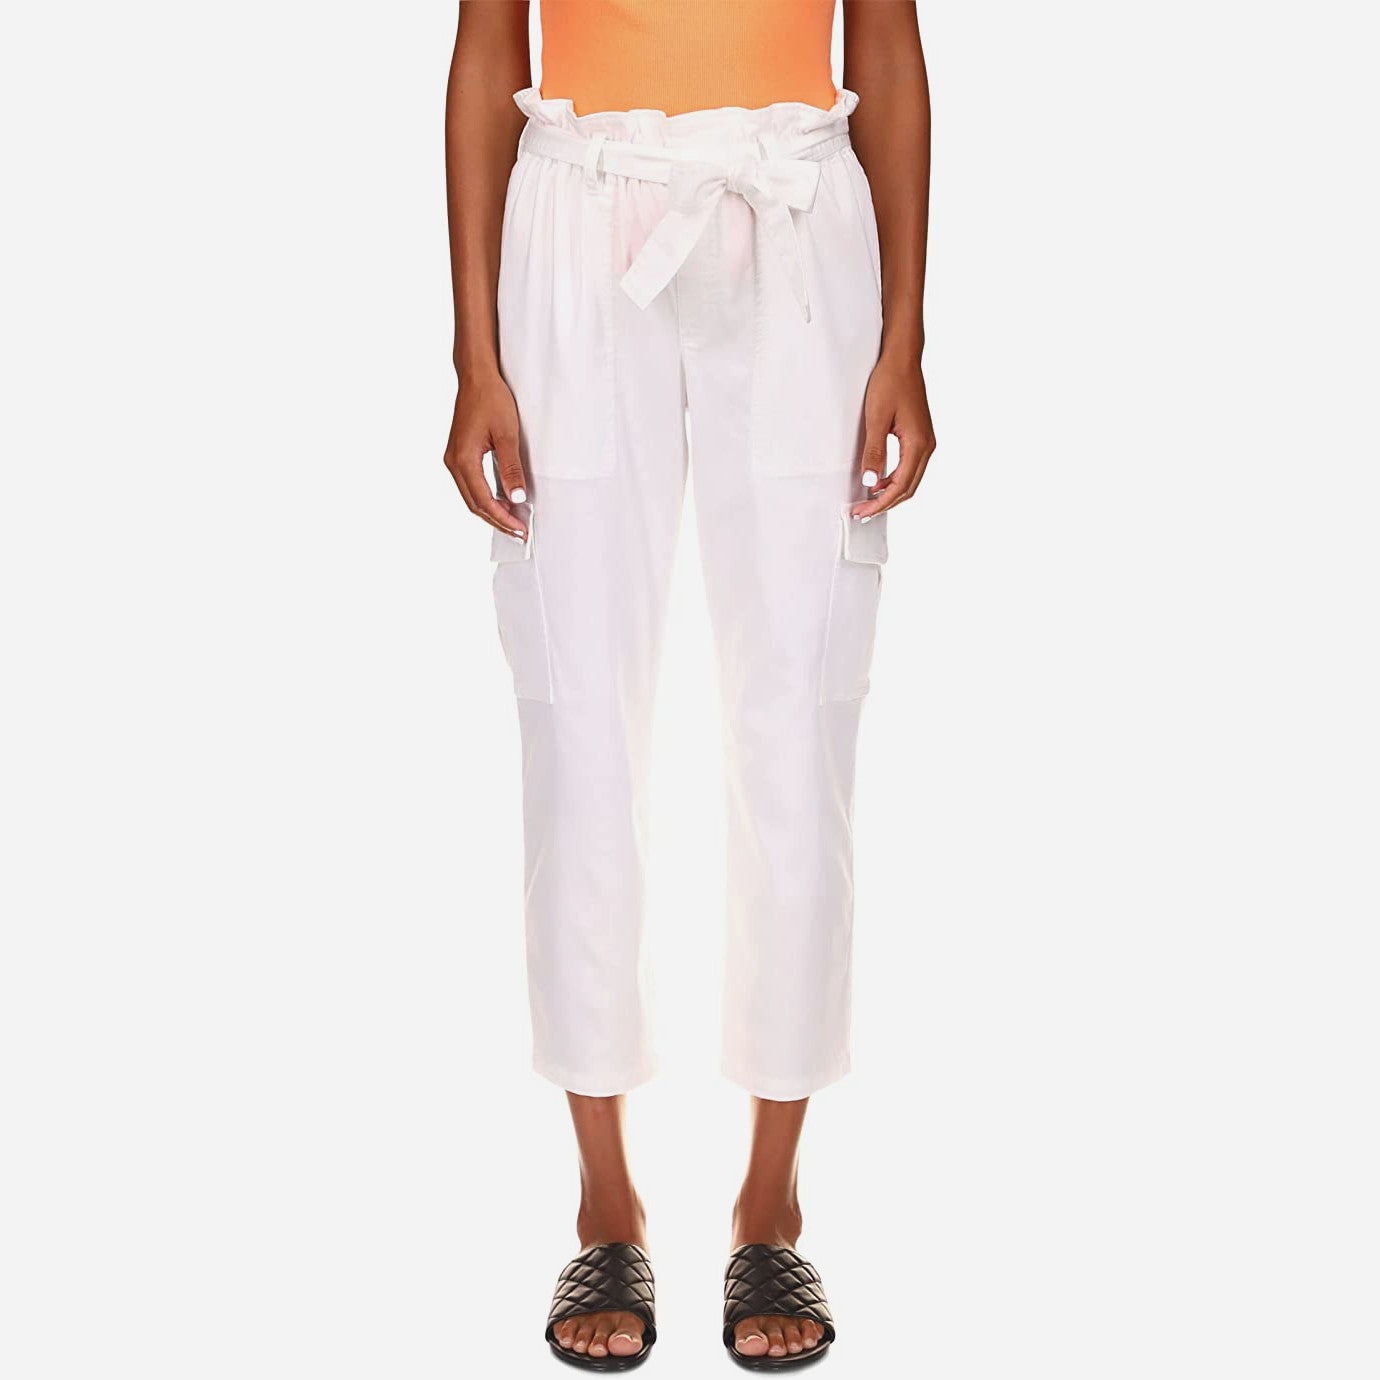 Gotstyle Fashion - Sanctuary Pants Paper Bag Waistline Pants with Sash - White